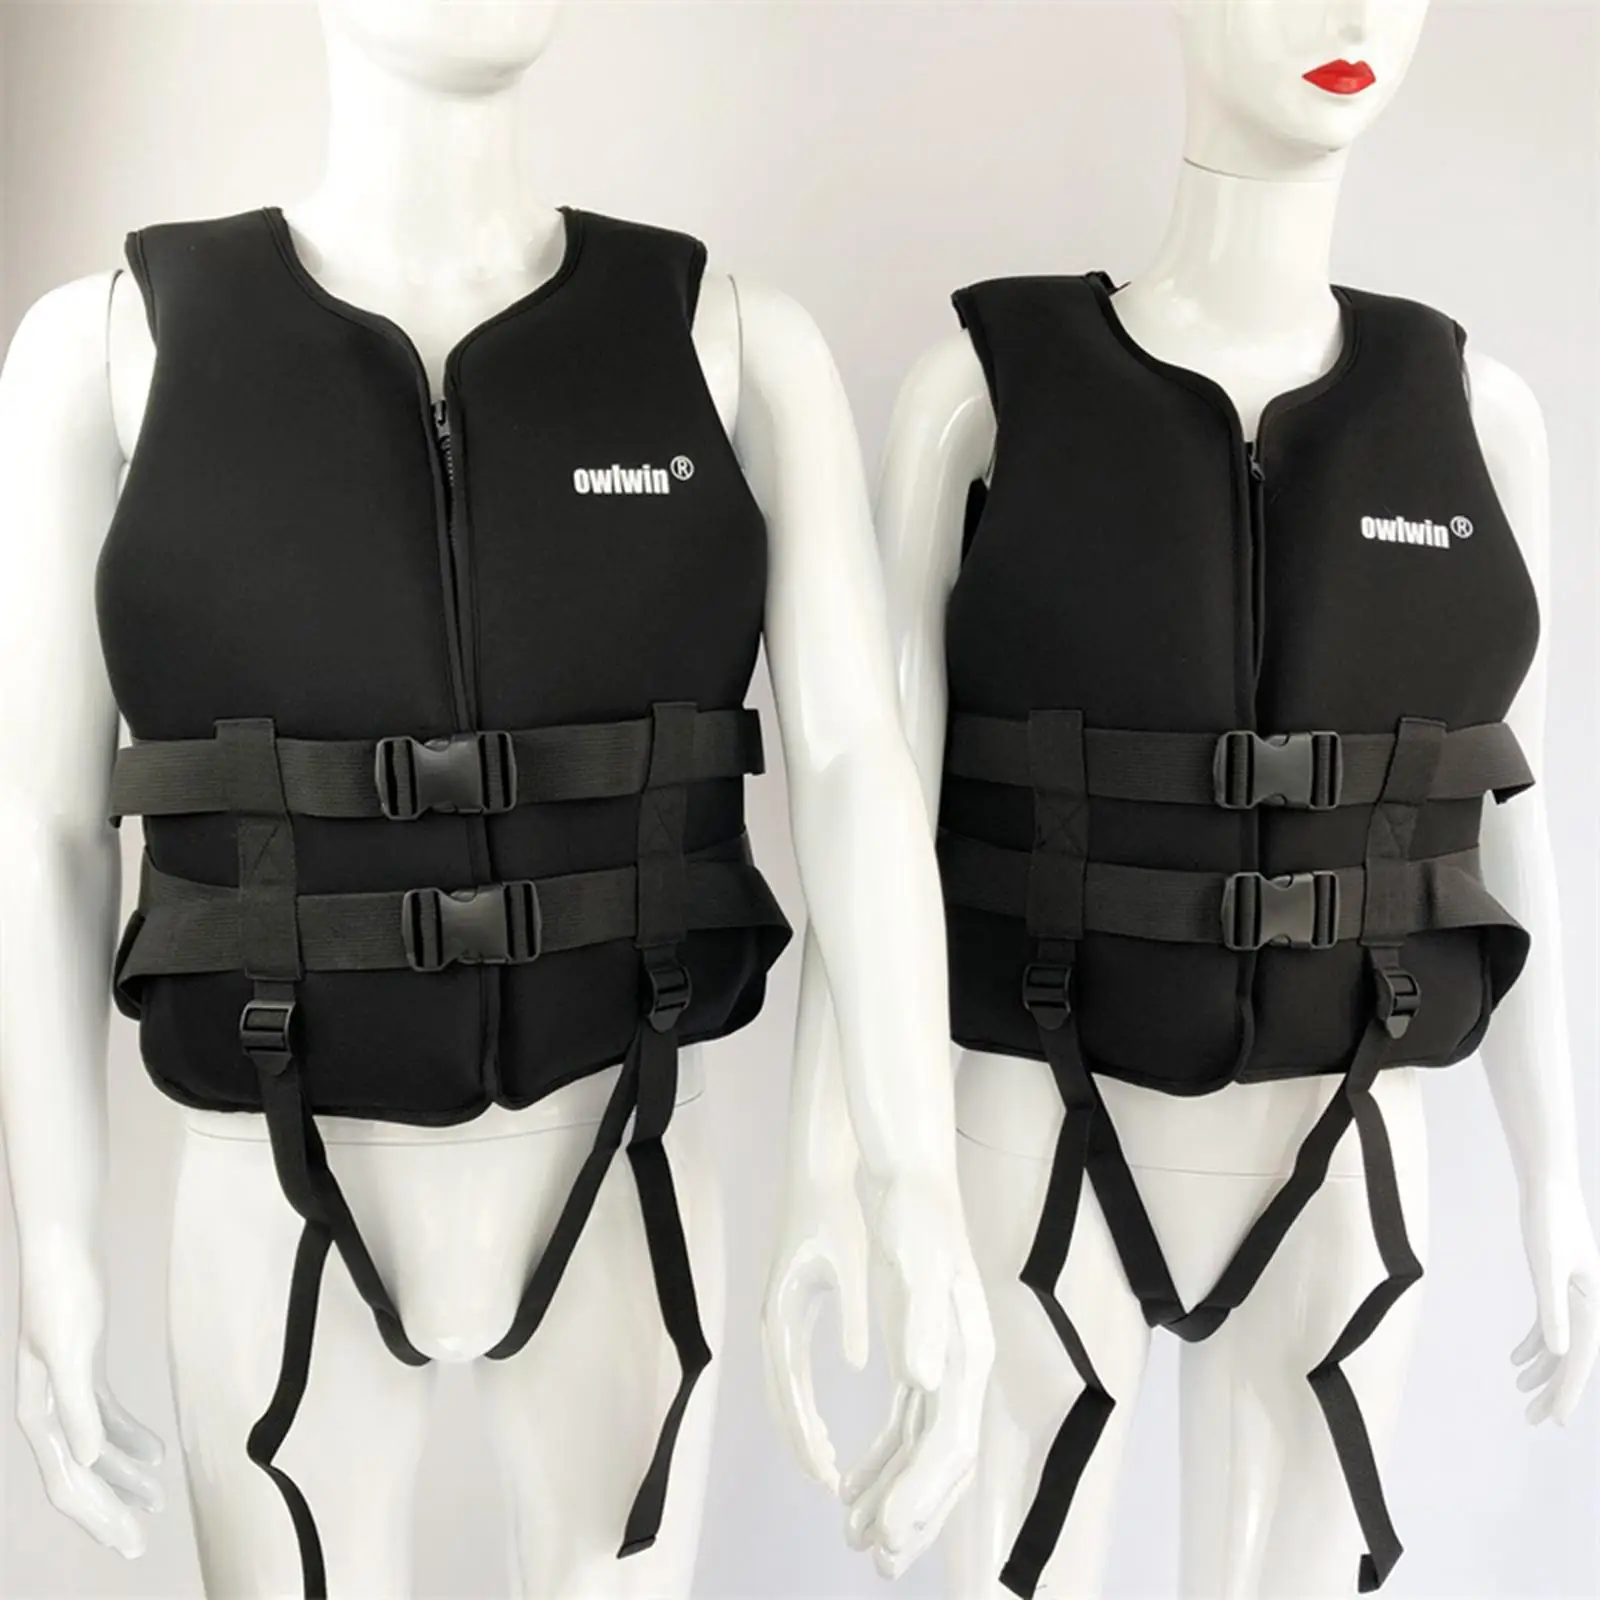 Neoprene Life Jackets Kayaking Paddle Board Buoyancy Aid for Surfing Diving Comfortable Breathable Adjustable Waterproof